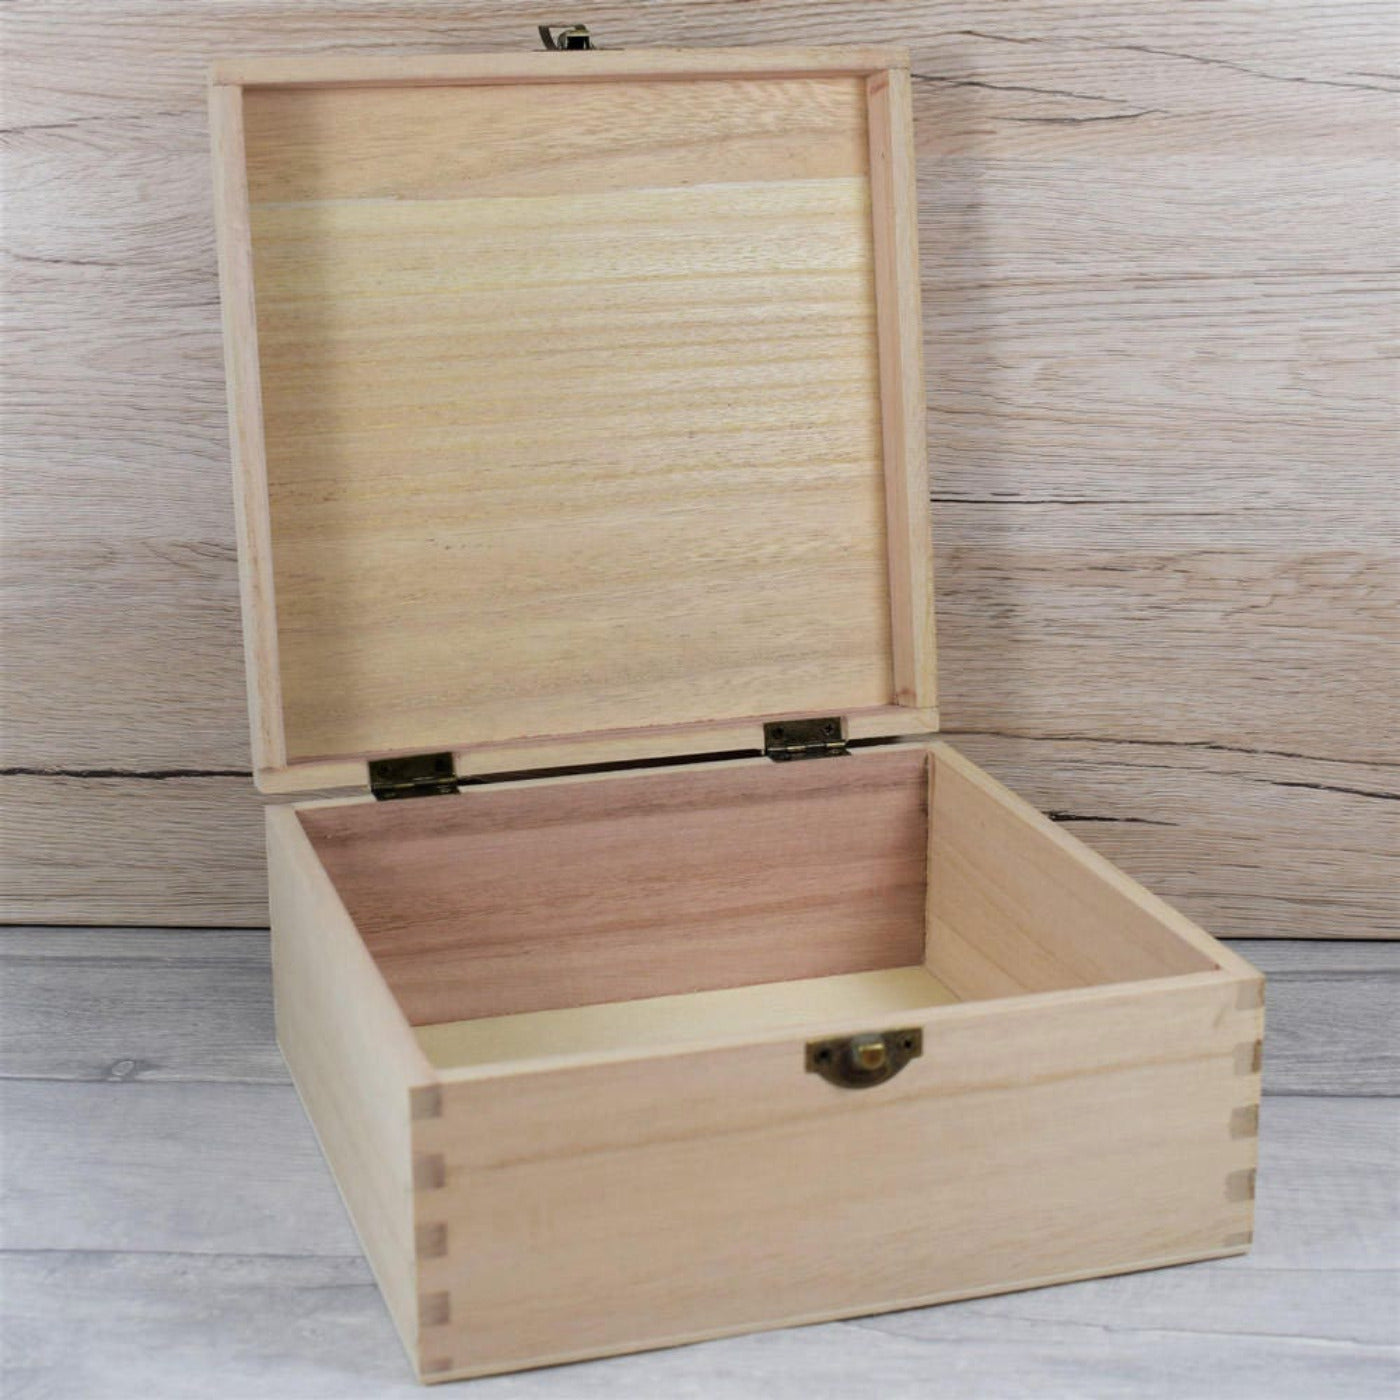 New Baby Keepsake Box - Memory Box, New Mother, Christening Gift